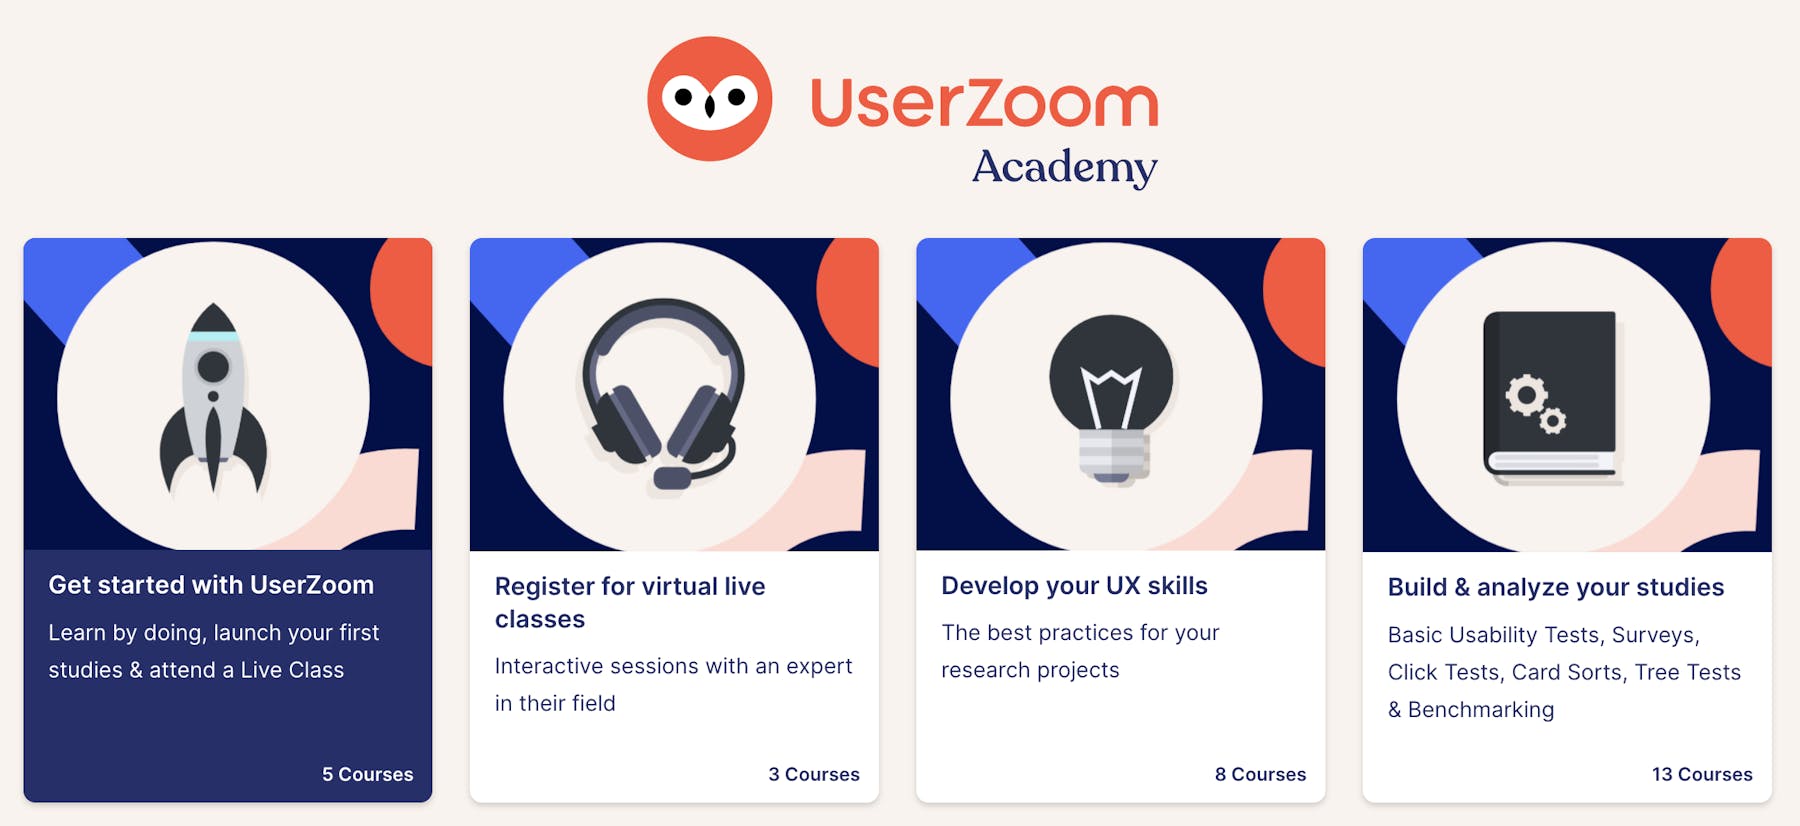 UserZoom Academy UX training